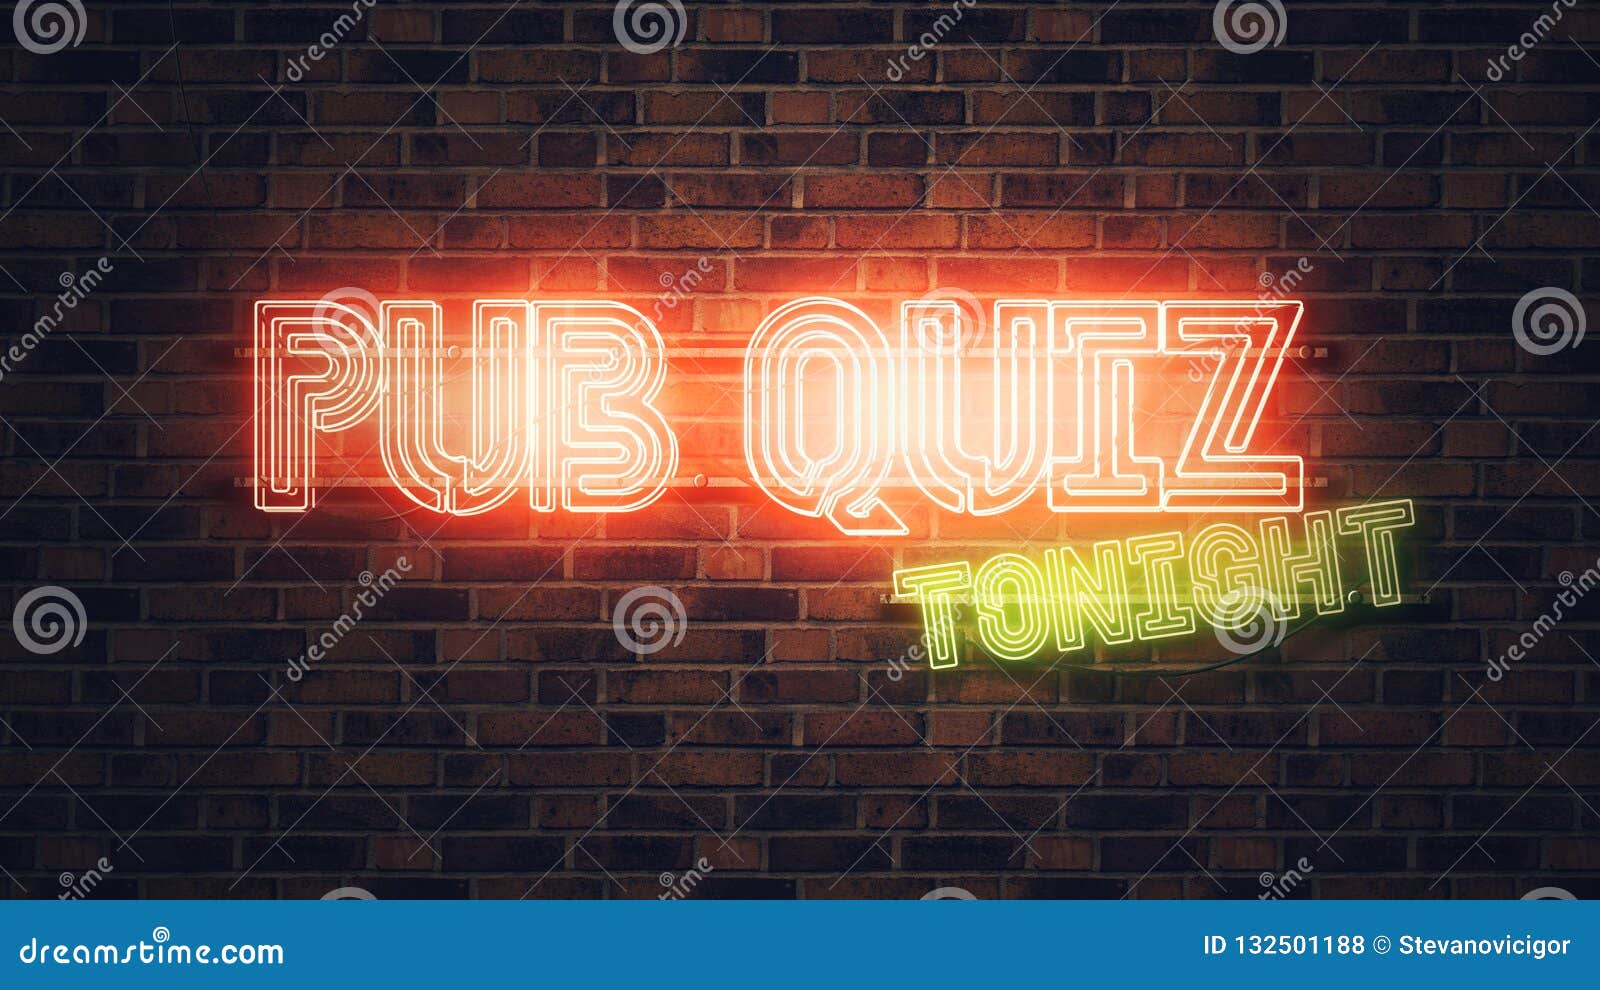 pub quiz neon sign mounted on brick wall